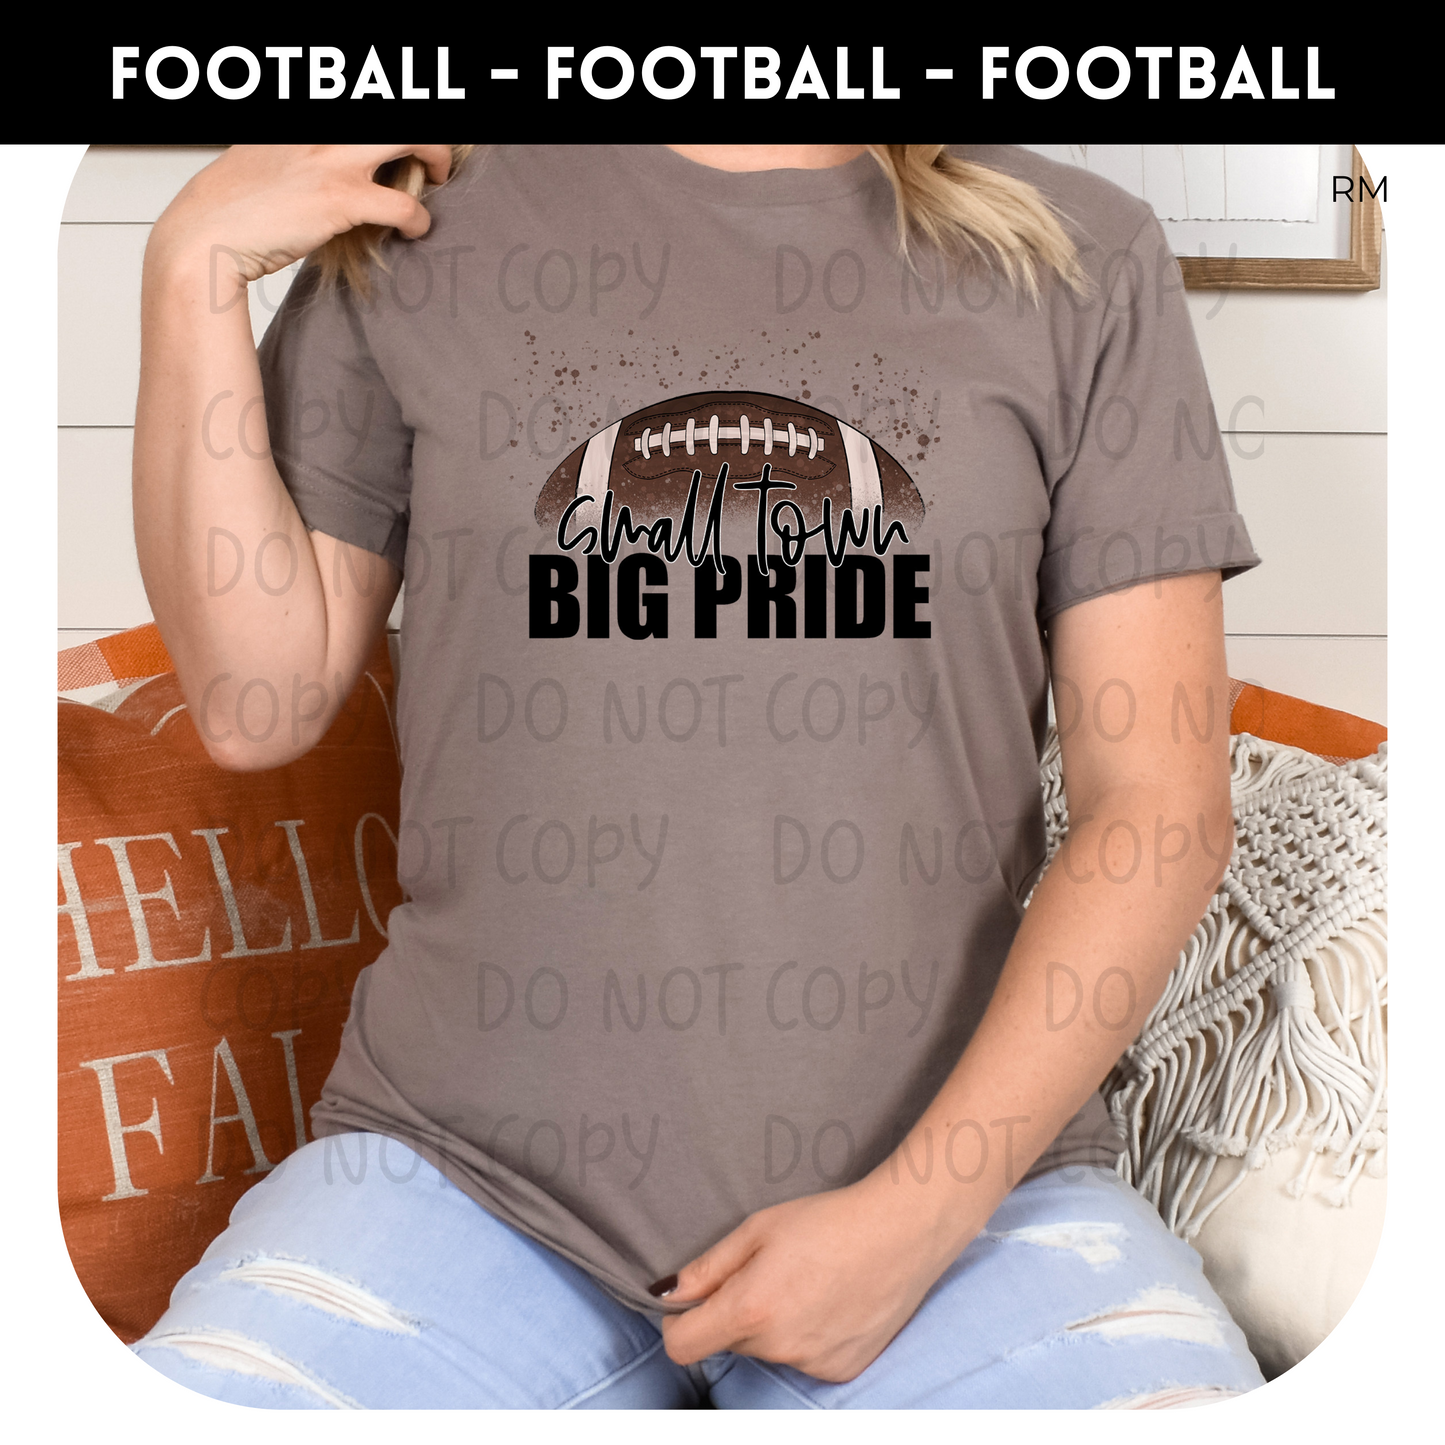 Small Town Big Pride Adult Shirt- Football 58